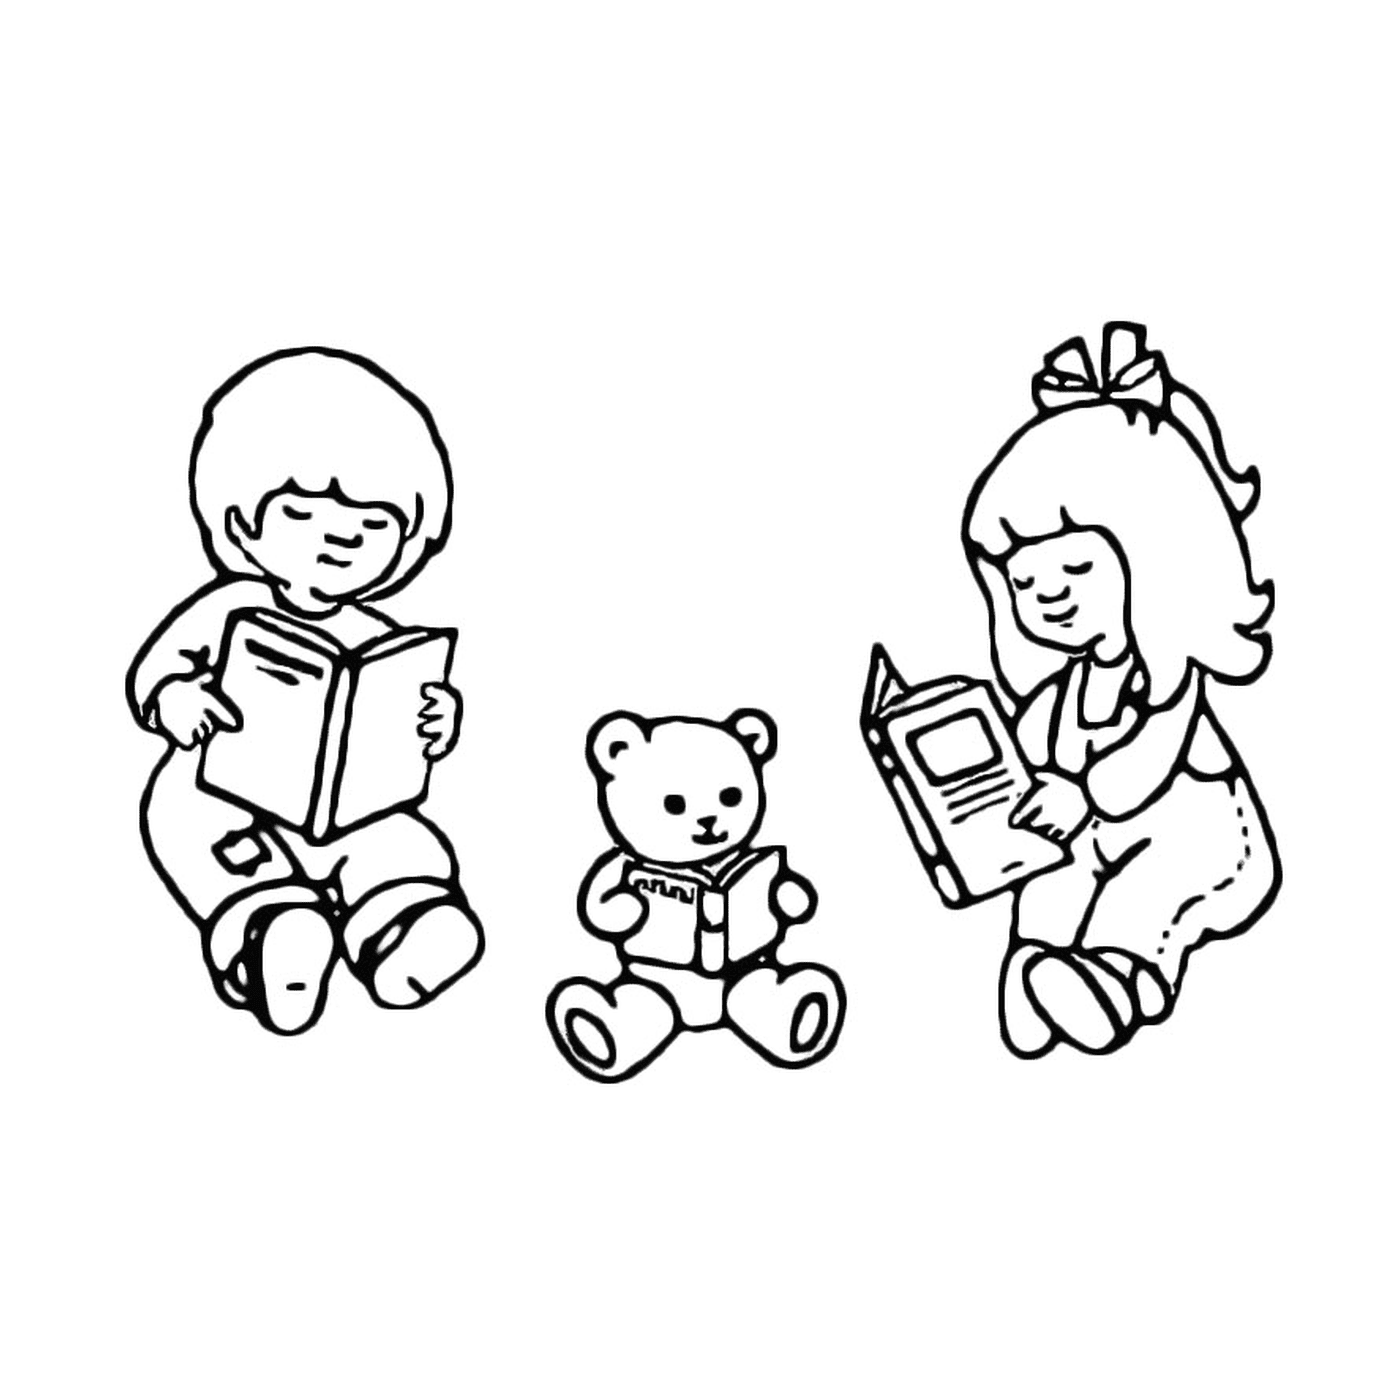  Three children read a book with a teddy bear 